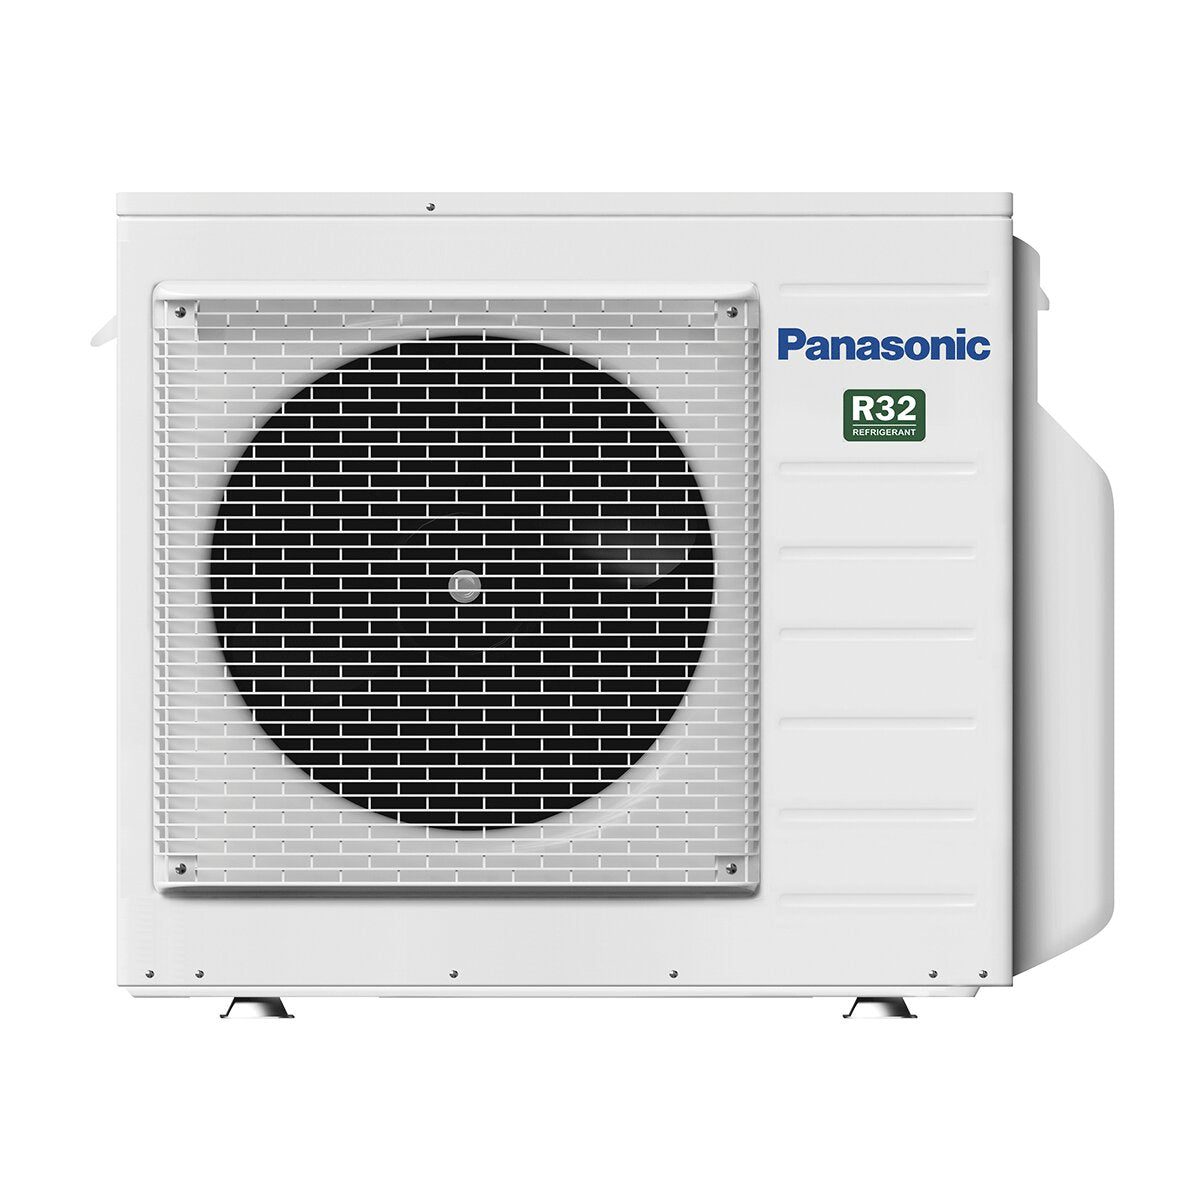 Panasonic TZ Series trial split air conditioner 7000+7000+12000 BTU A+++ wifi external unit kW